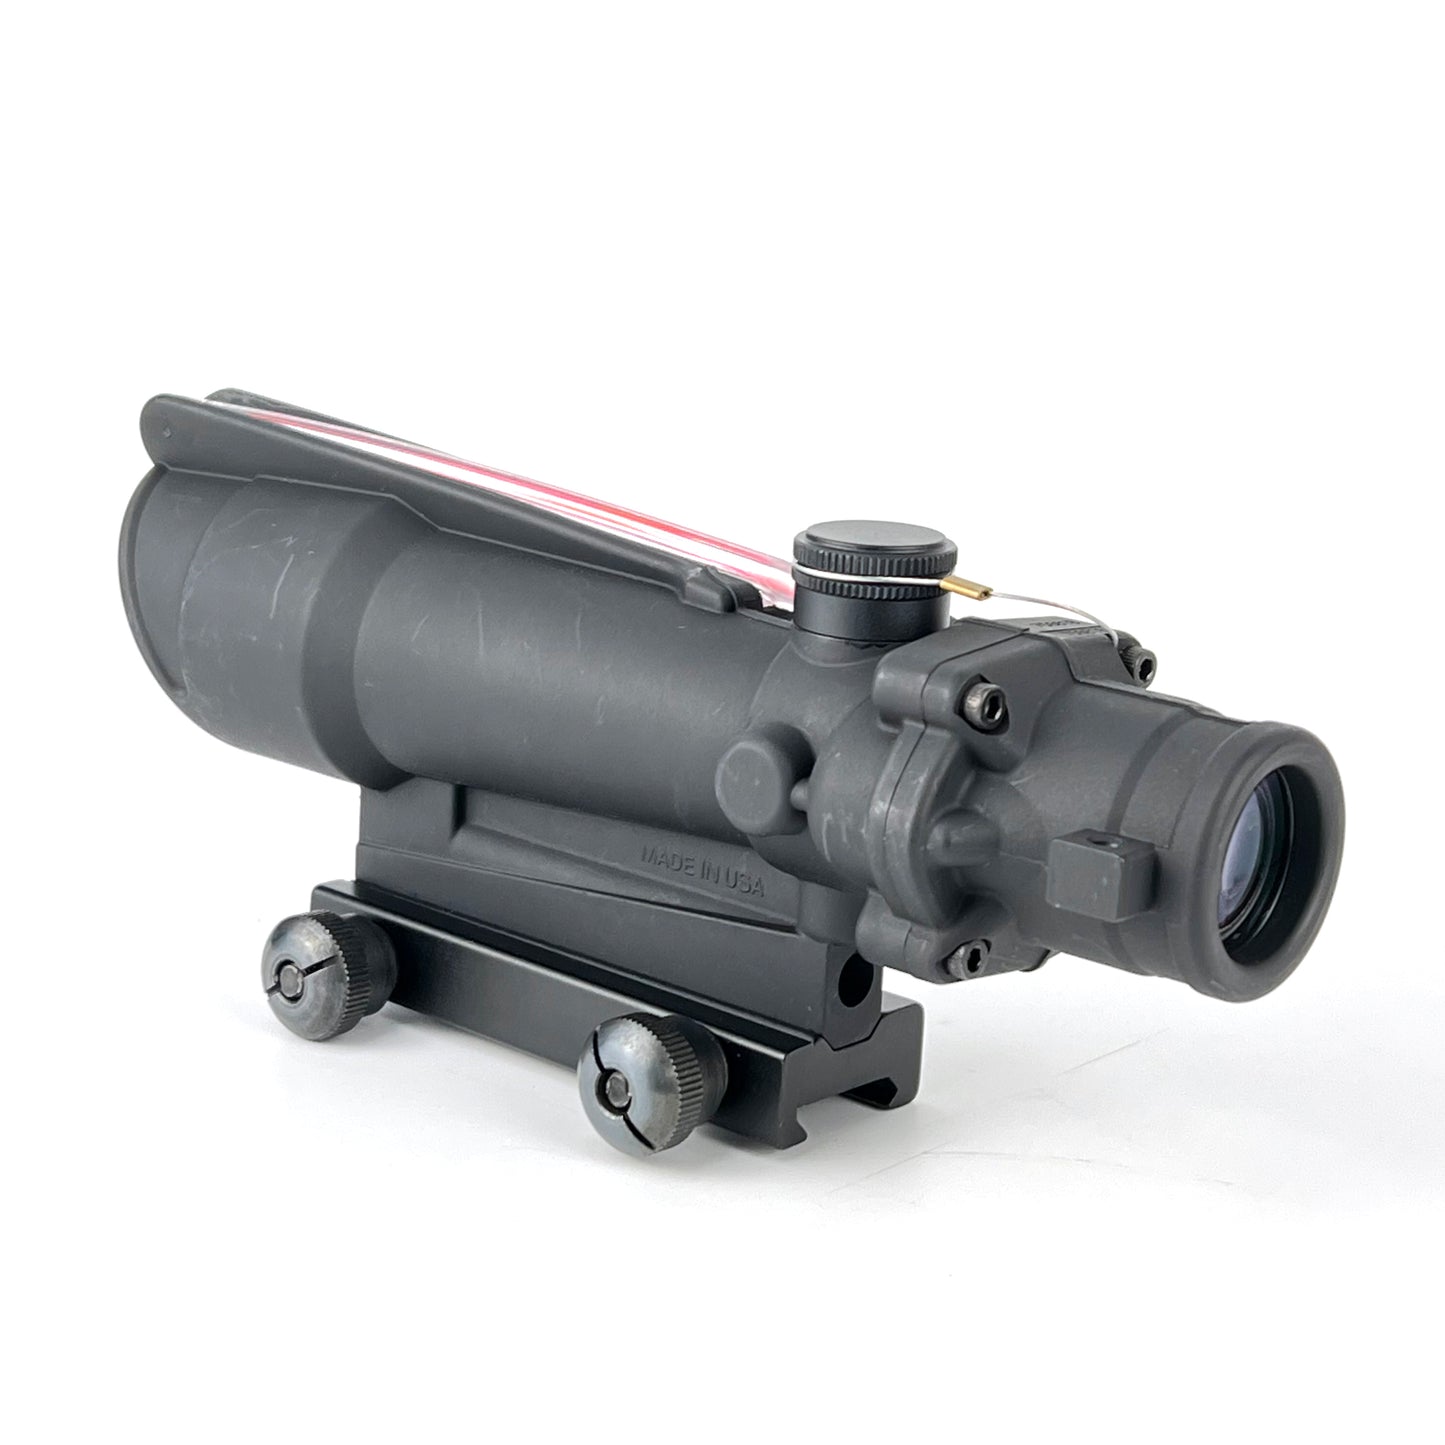 5x35 Power Tactical Telescope Scope Hunting Optics Illuminated Red Dot Sight